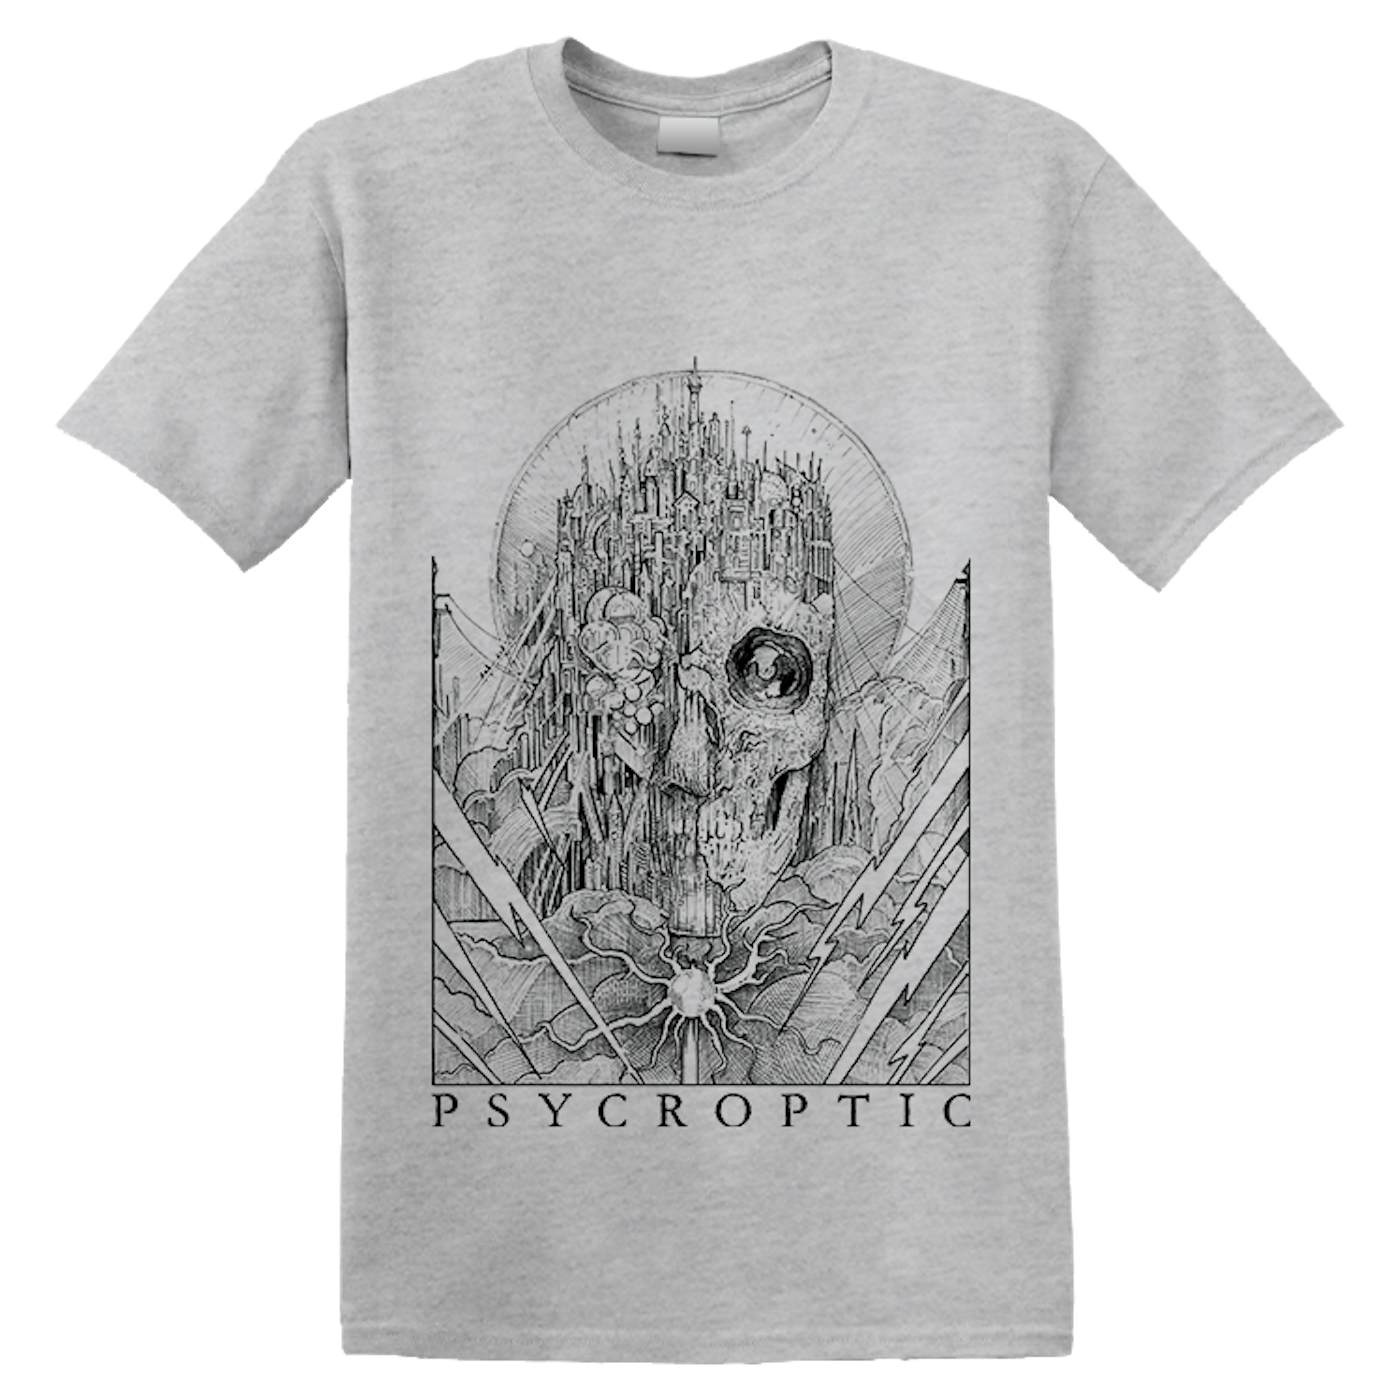 PSYCROPTIC - 'Architect' T-Shirt